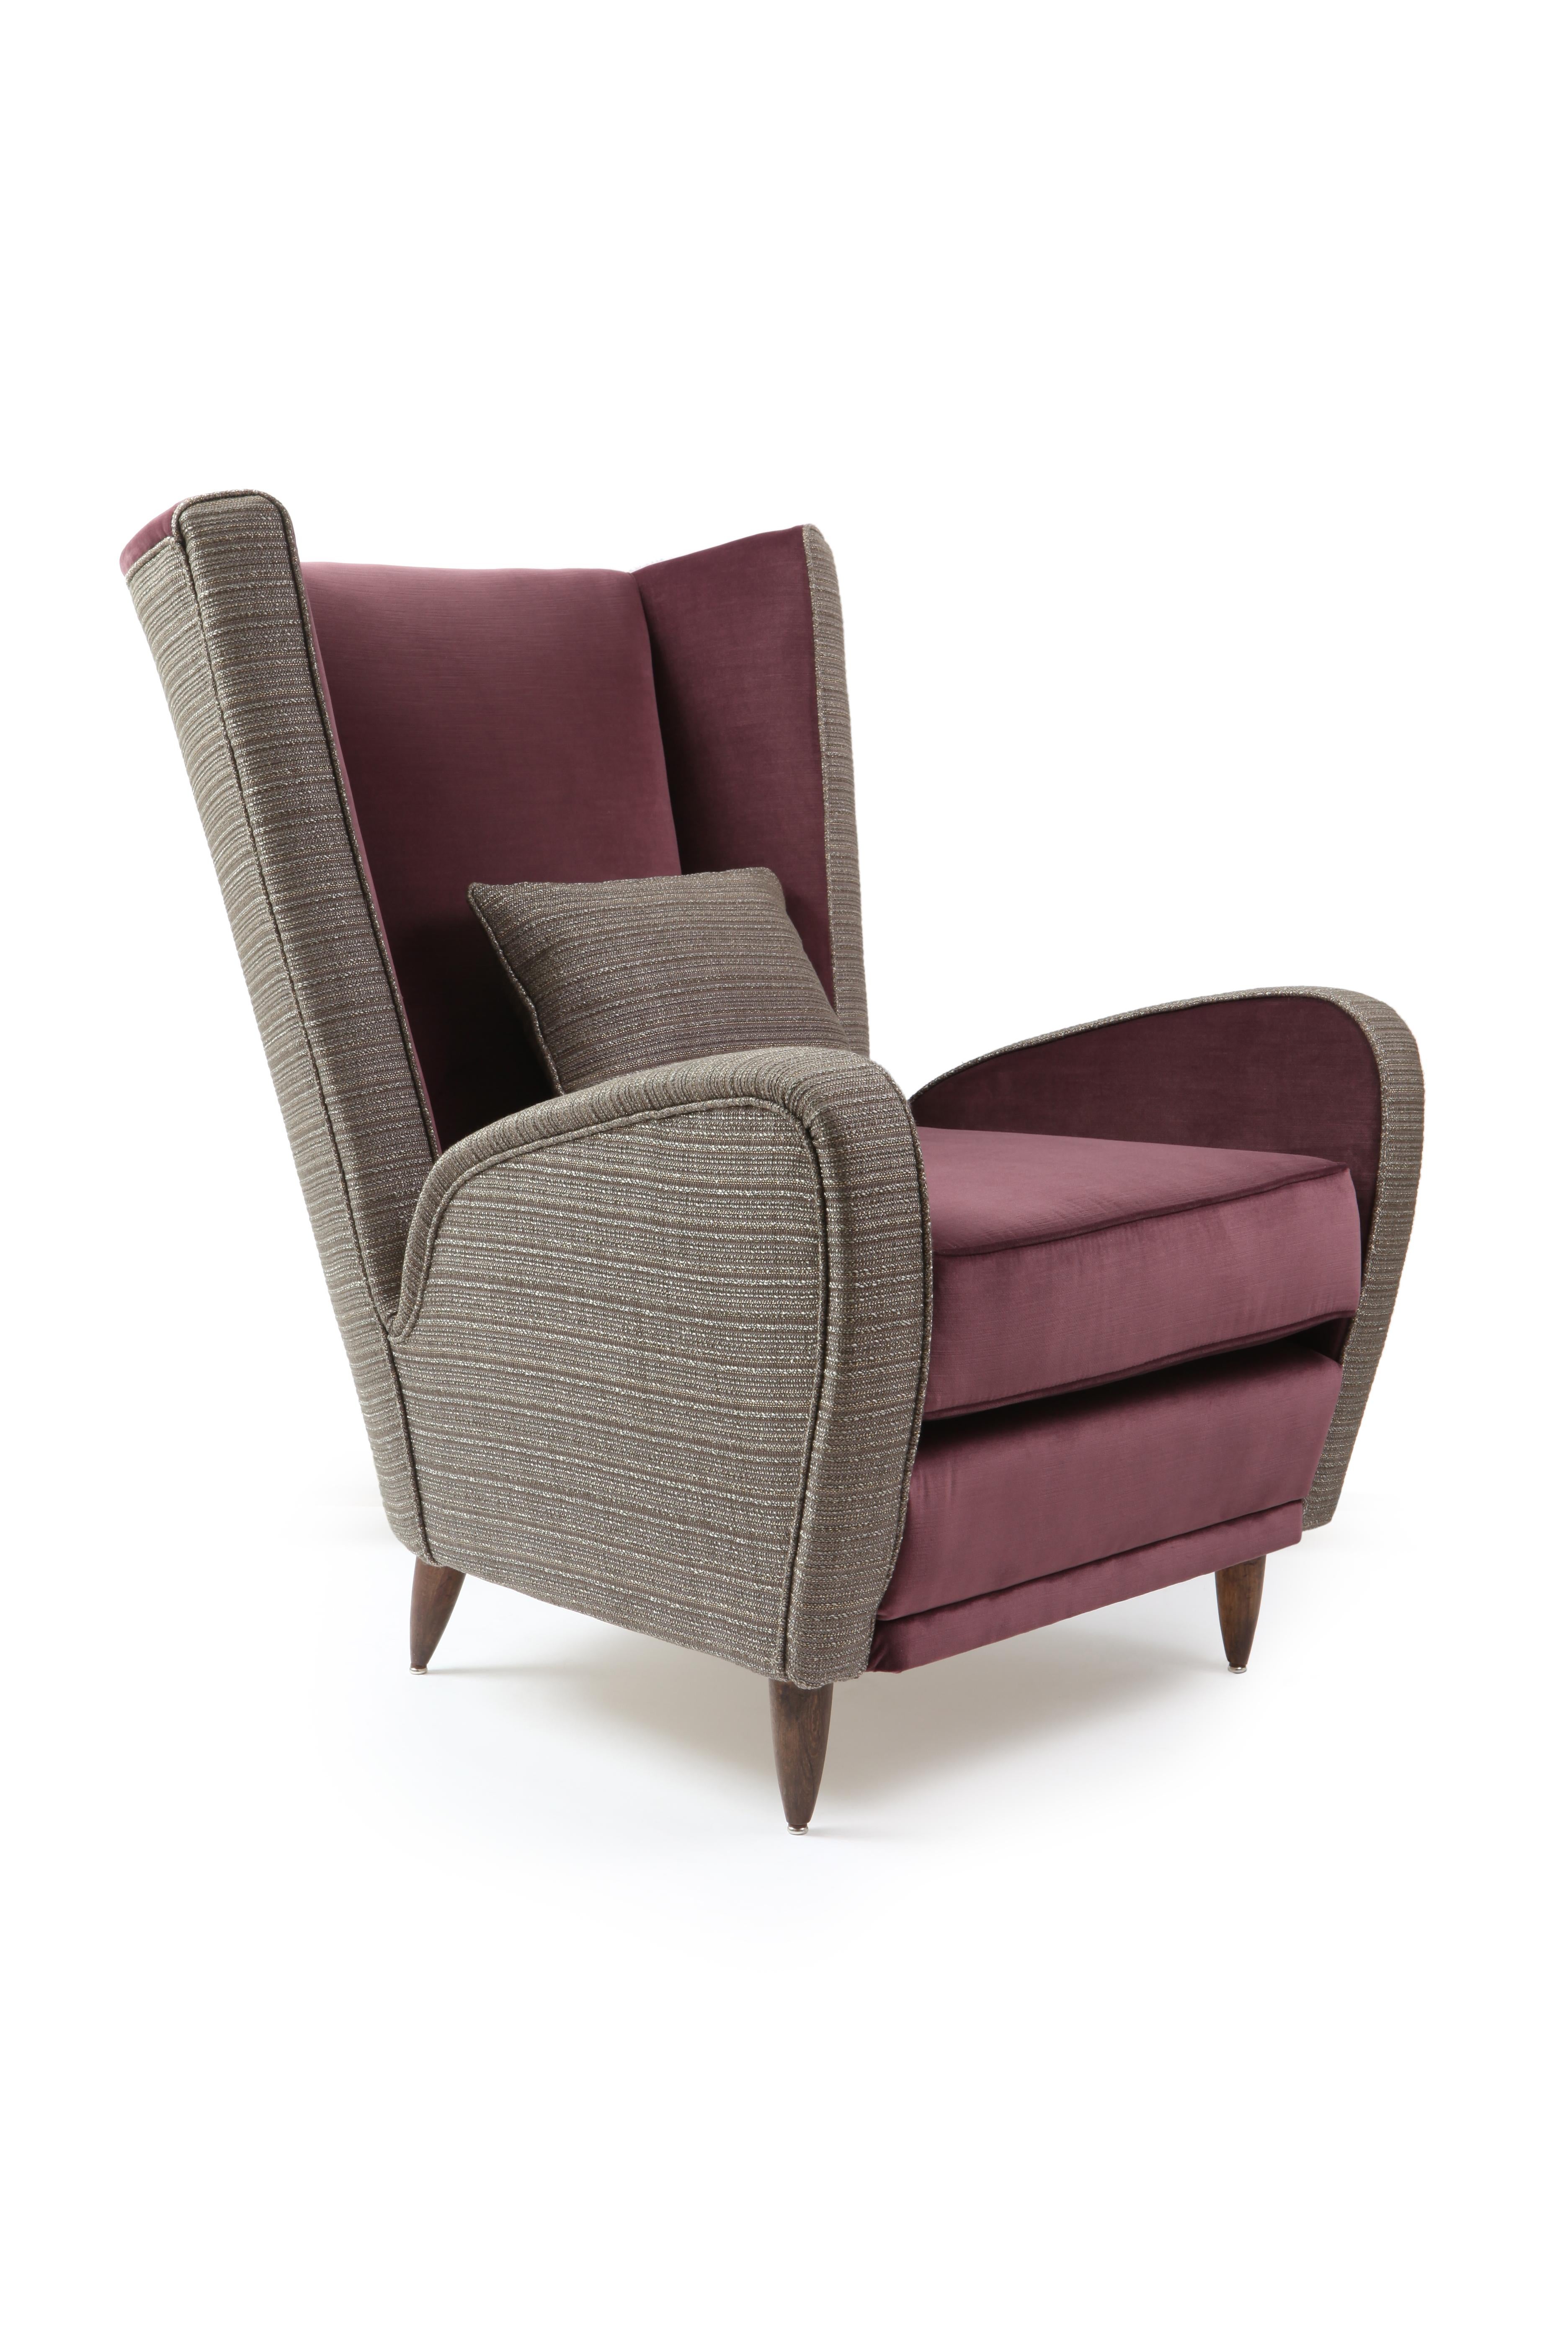 Mid-century Italian armchair reupholstered in Nobilis plum cotton velvet and Dedar Lucilo boucle fabric.